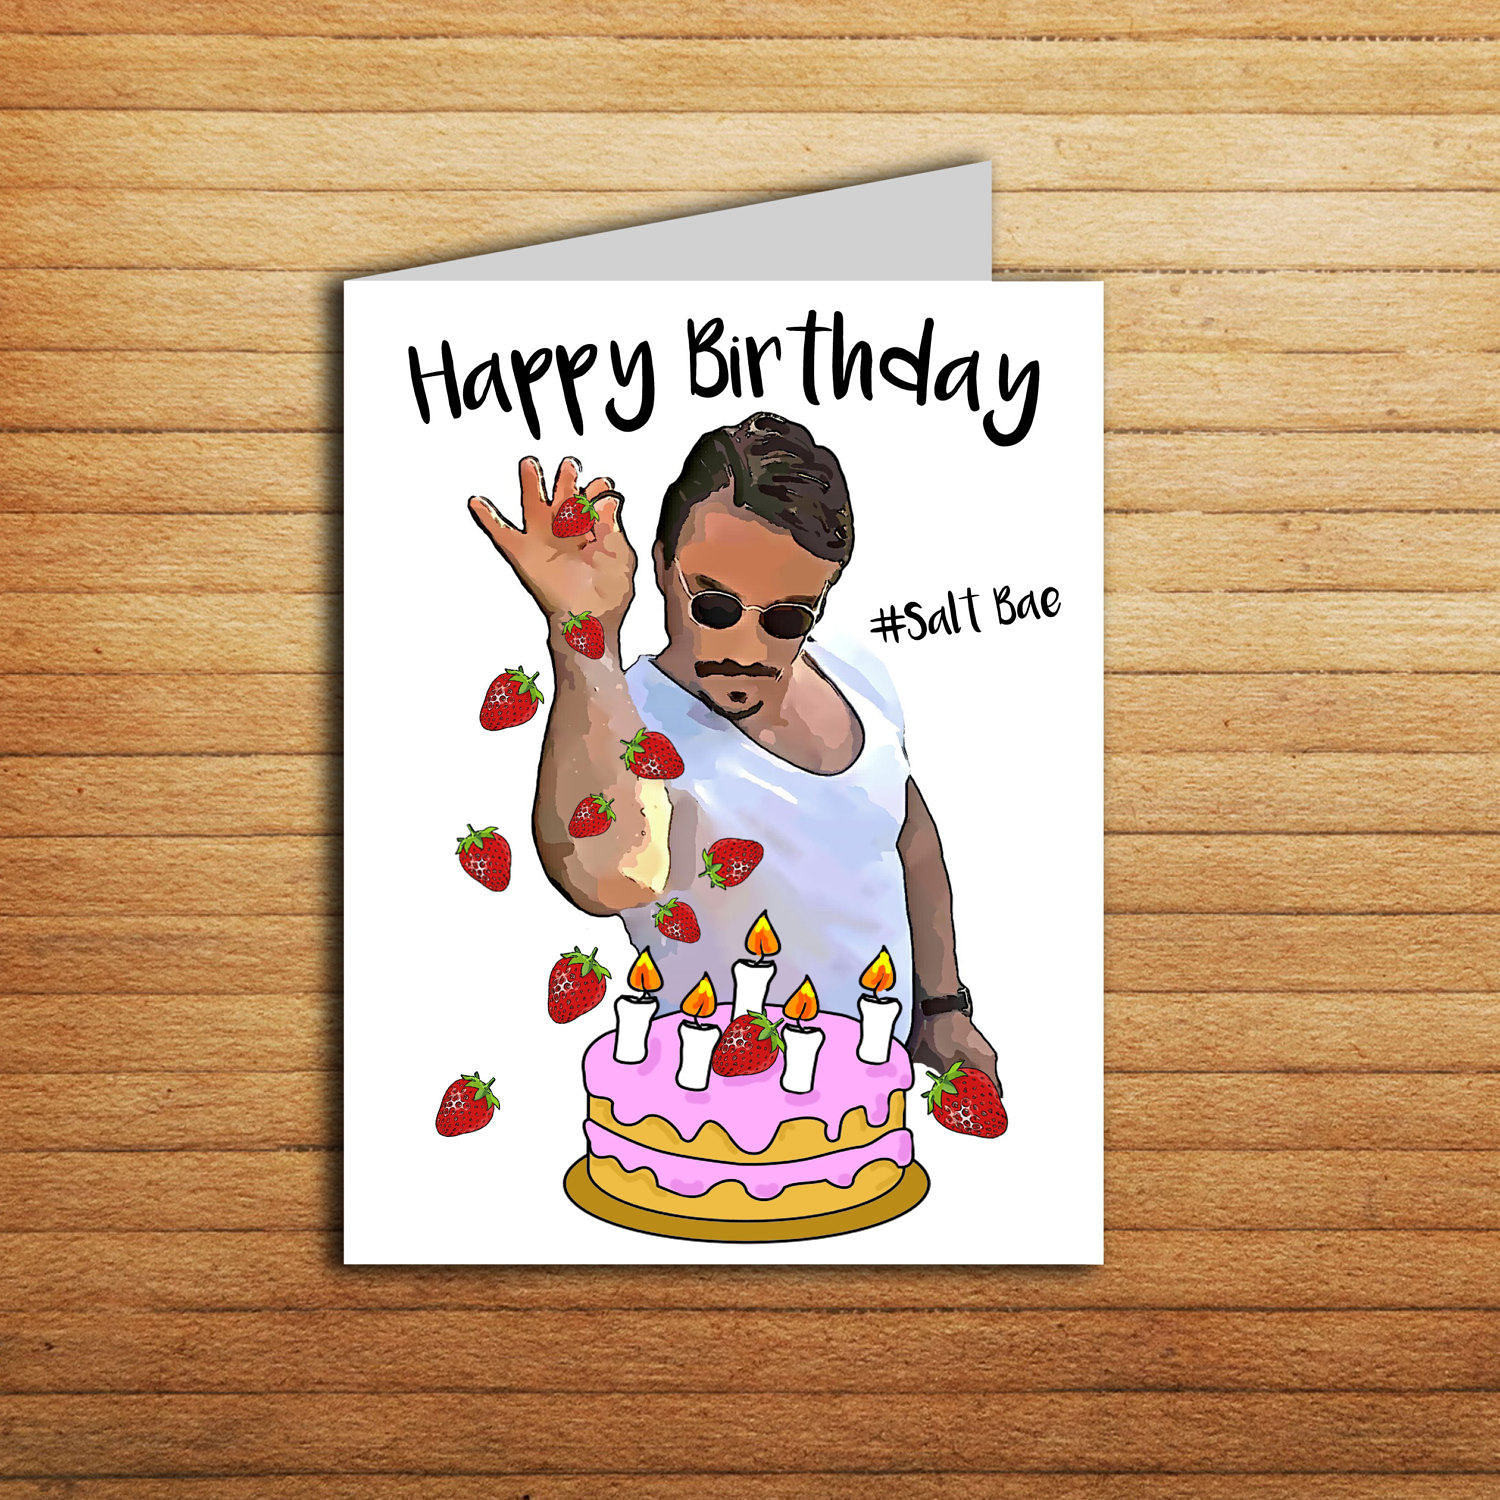 Printable Birthday Cards Funny
 Salt Bae Birthday Card Printable Funny Birthday Card for